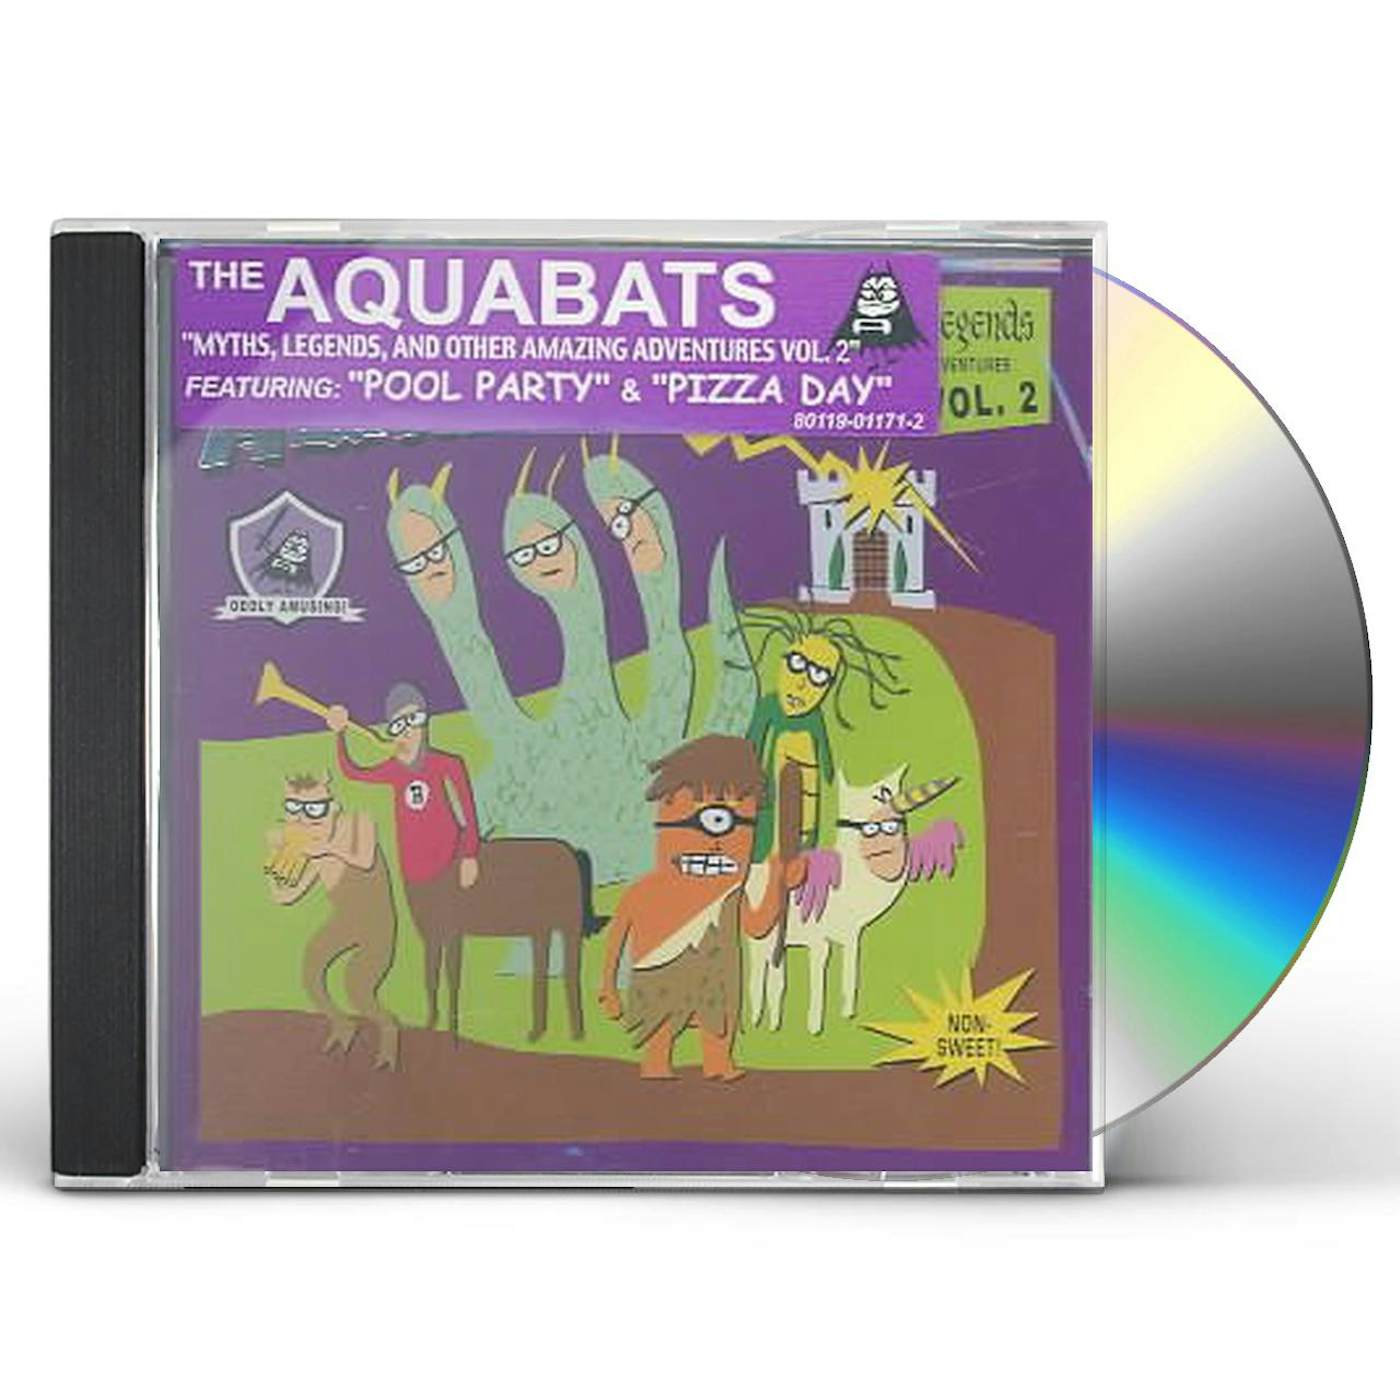 The Aquabats! MYTHS LEGENDS & OTHER AMAZING ADVENTURES 2 CD